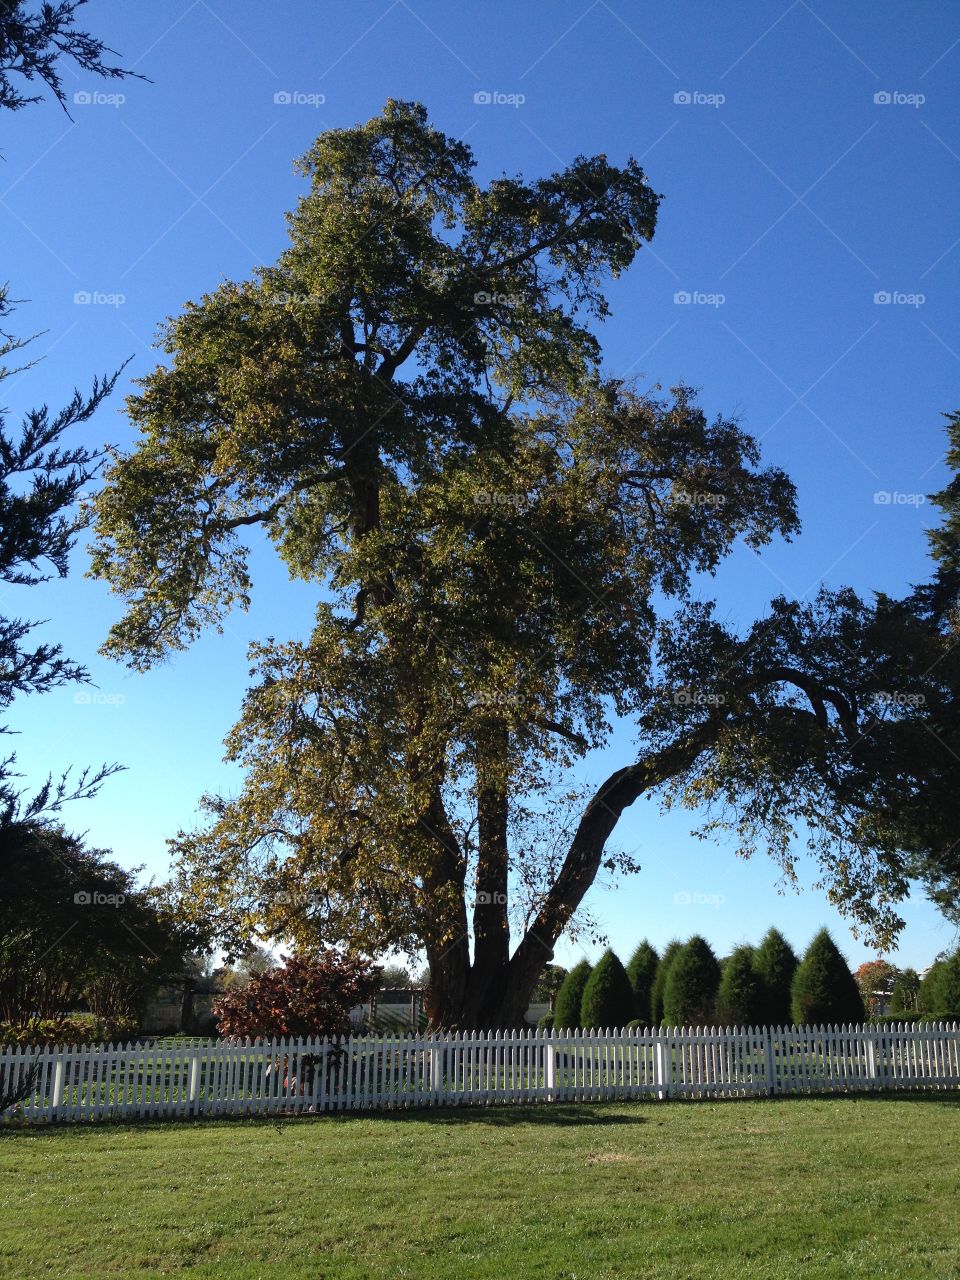 Carlton Plantation tree